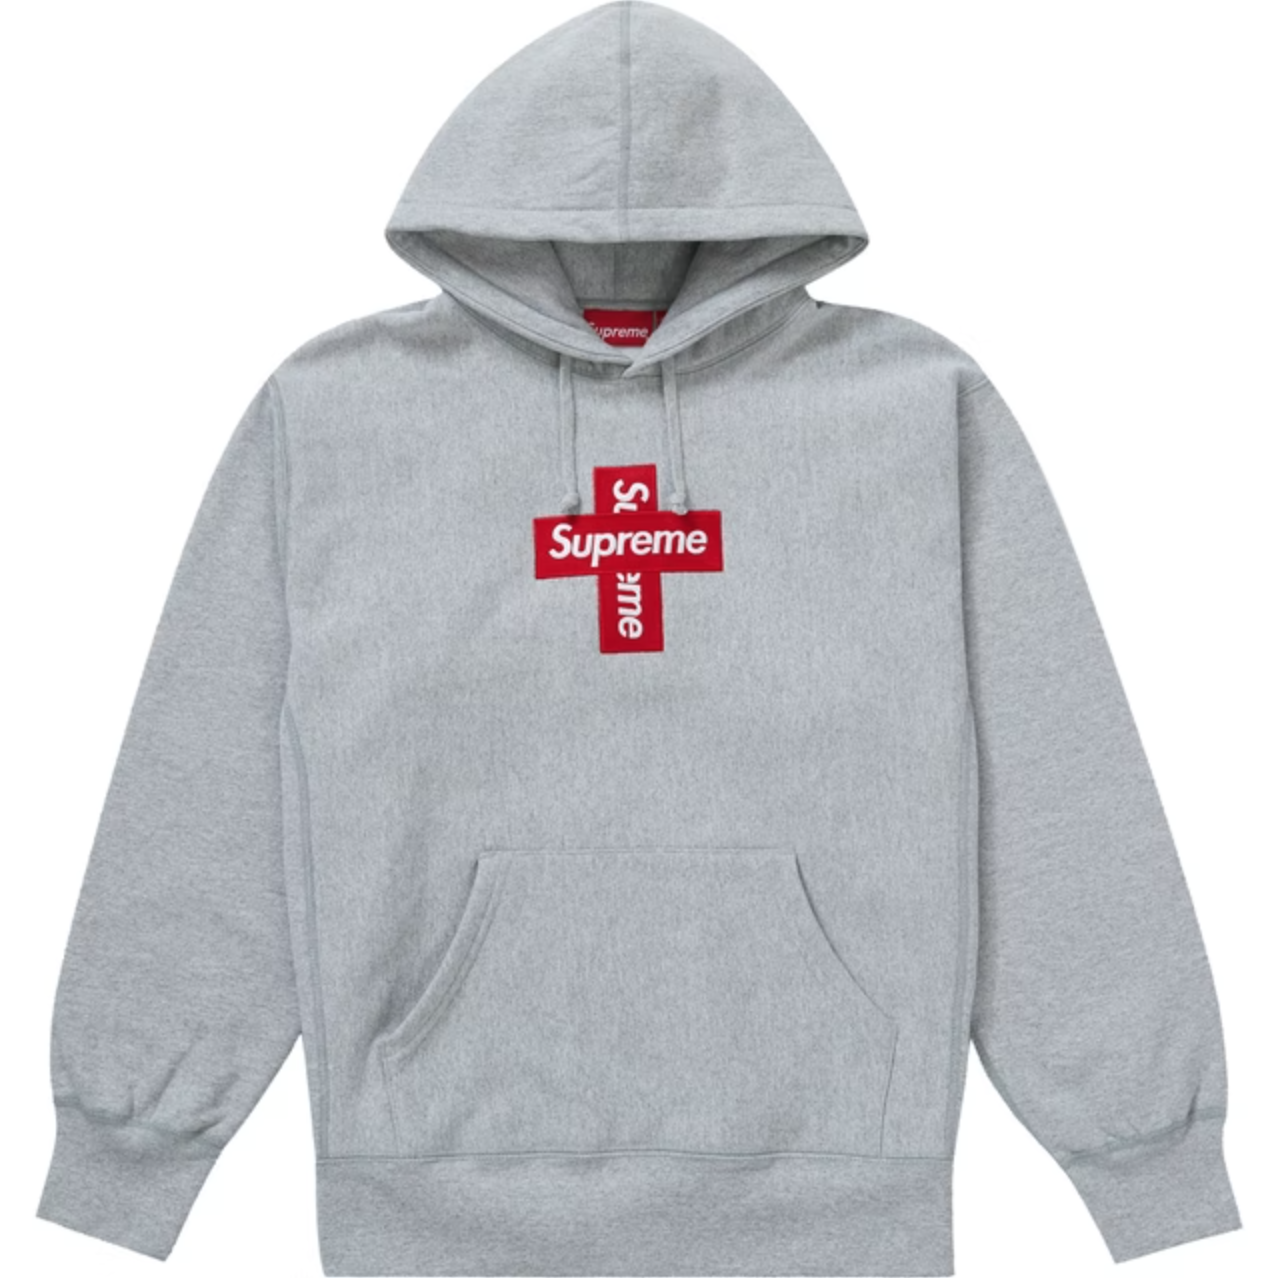 NEW Supreme Cross Box Logo Hooded Sweatshirt Heather Grey Black